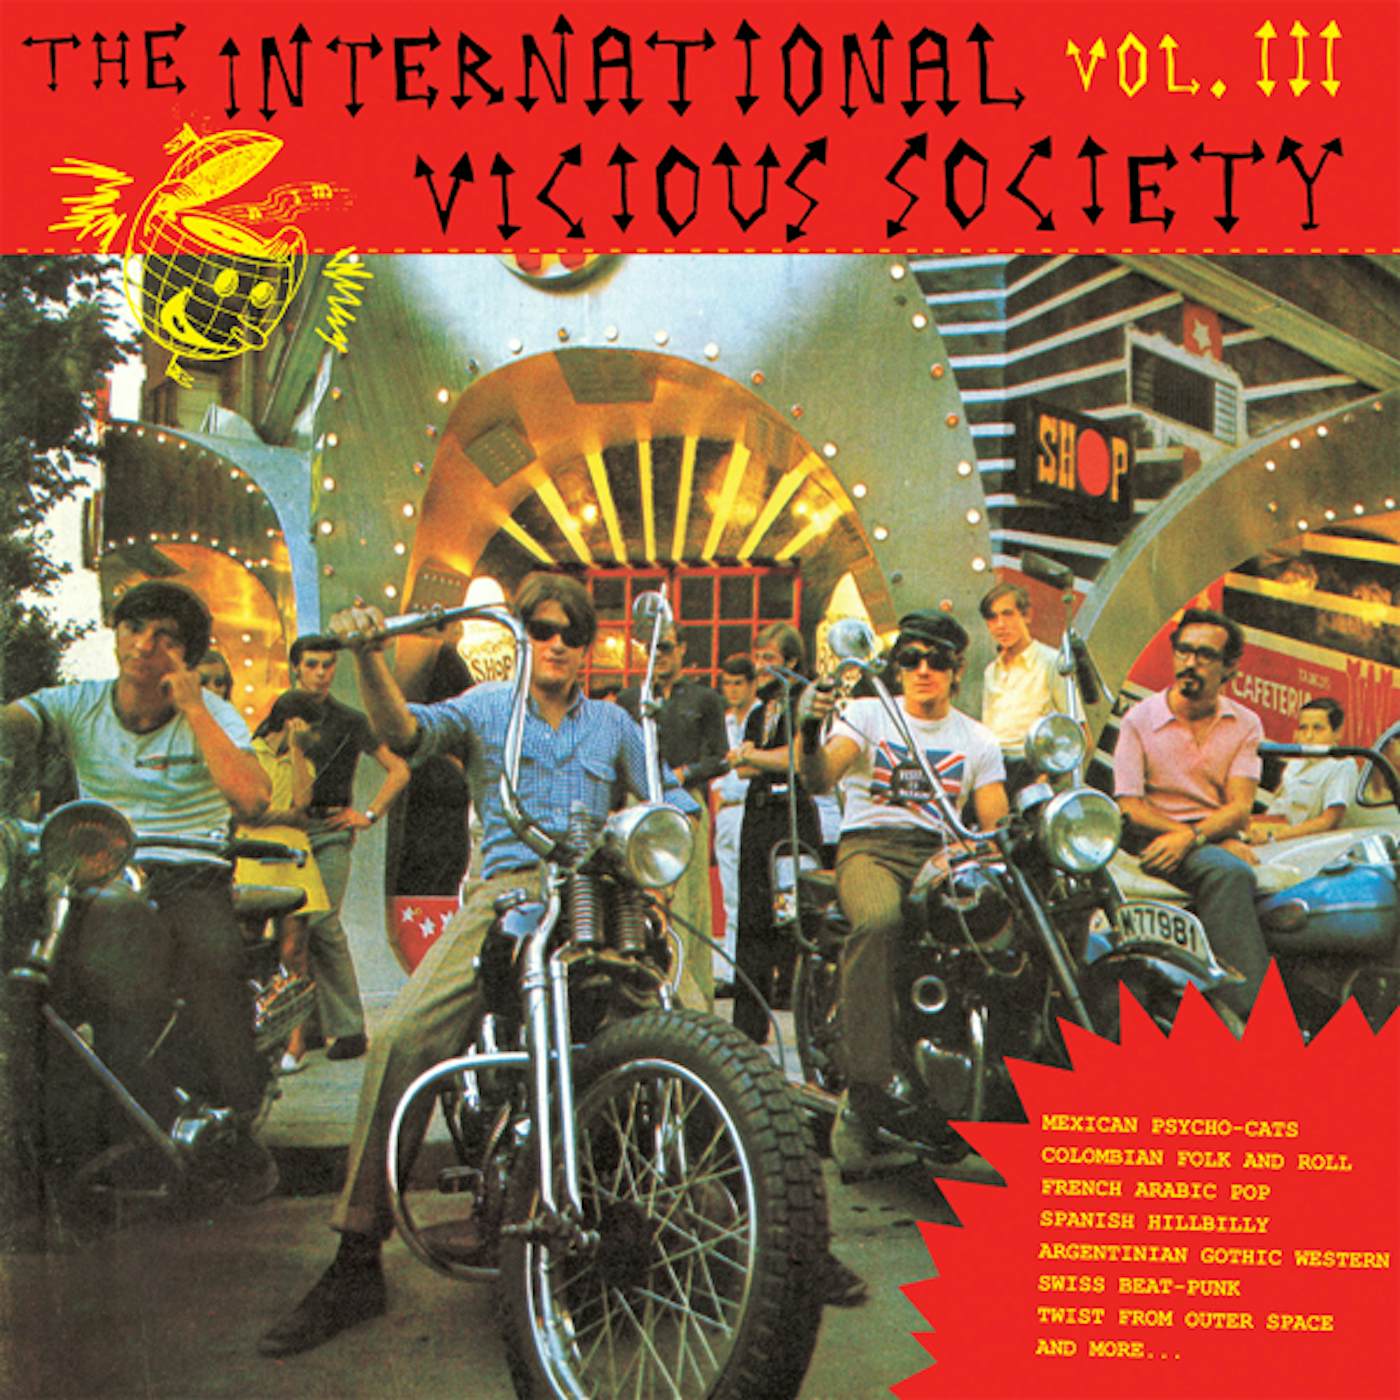 INTERNATIONAL VICIOUS SOCIETY VOL. III / VARIOUS Vinyl Record